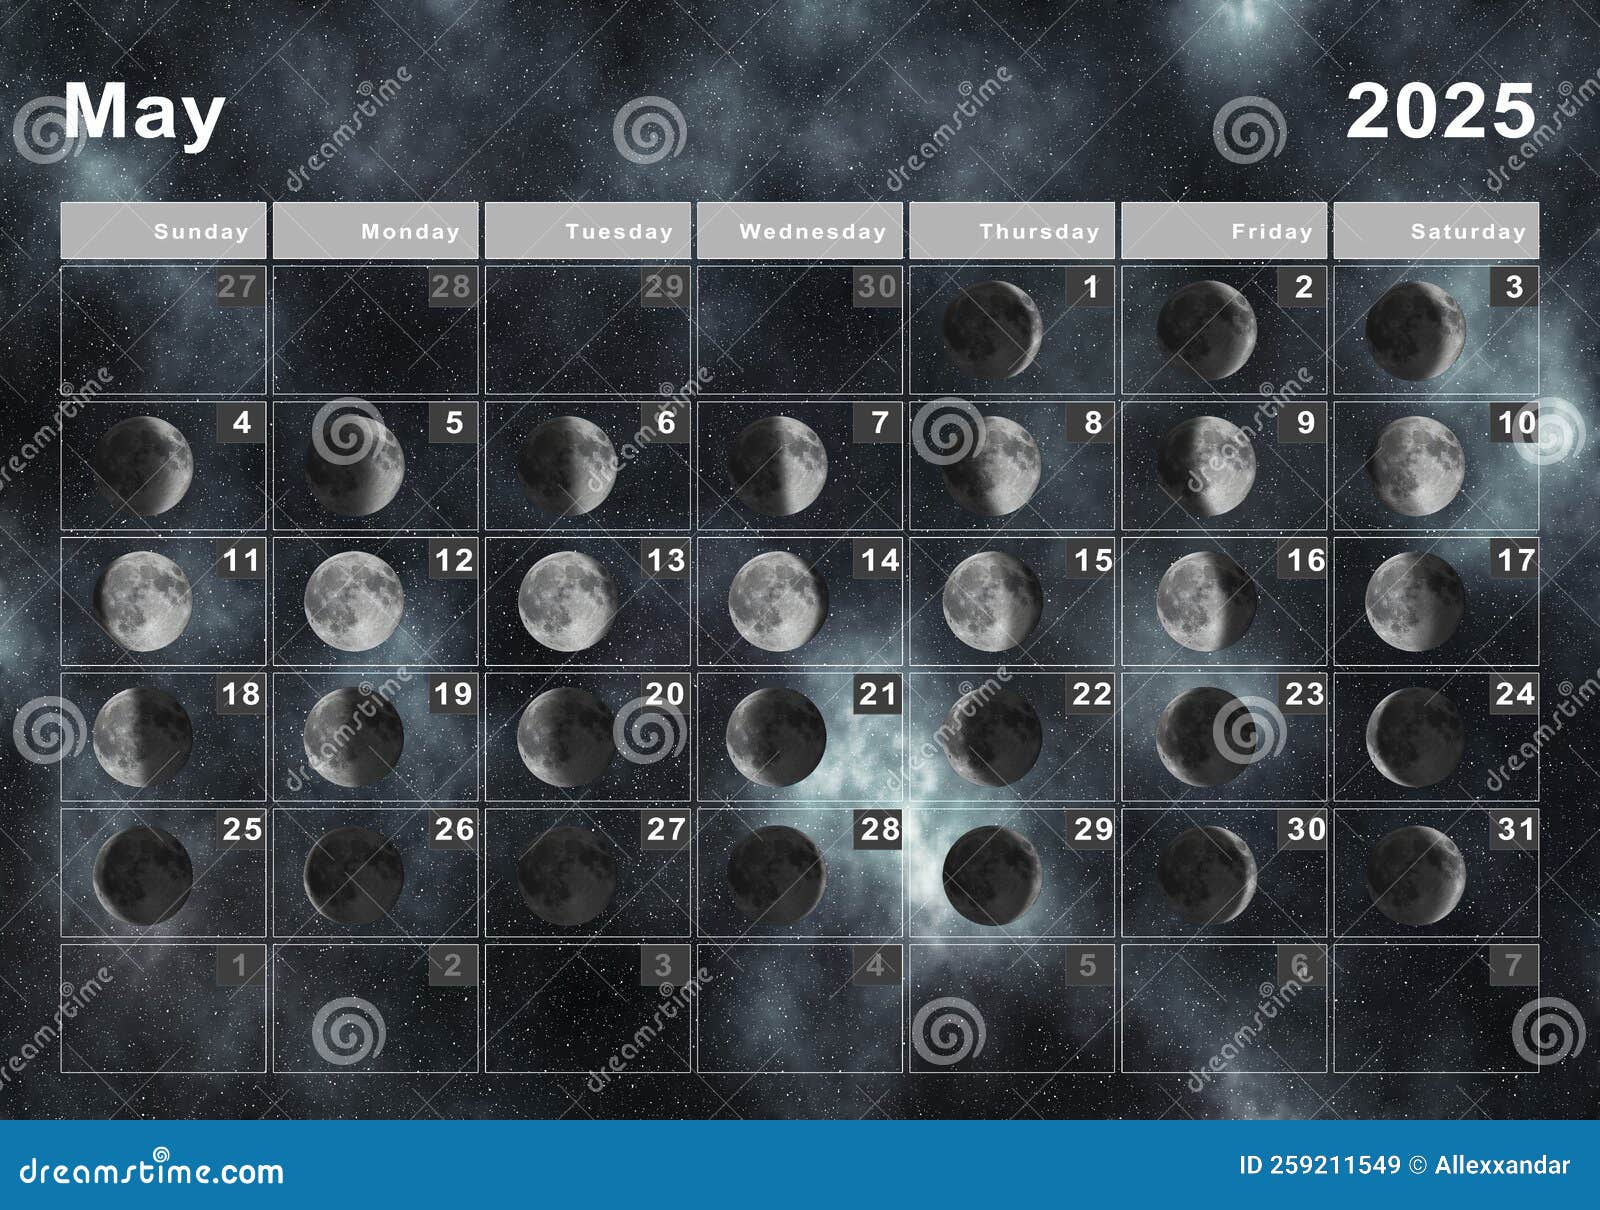 May 2025 Lunar Calendar